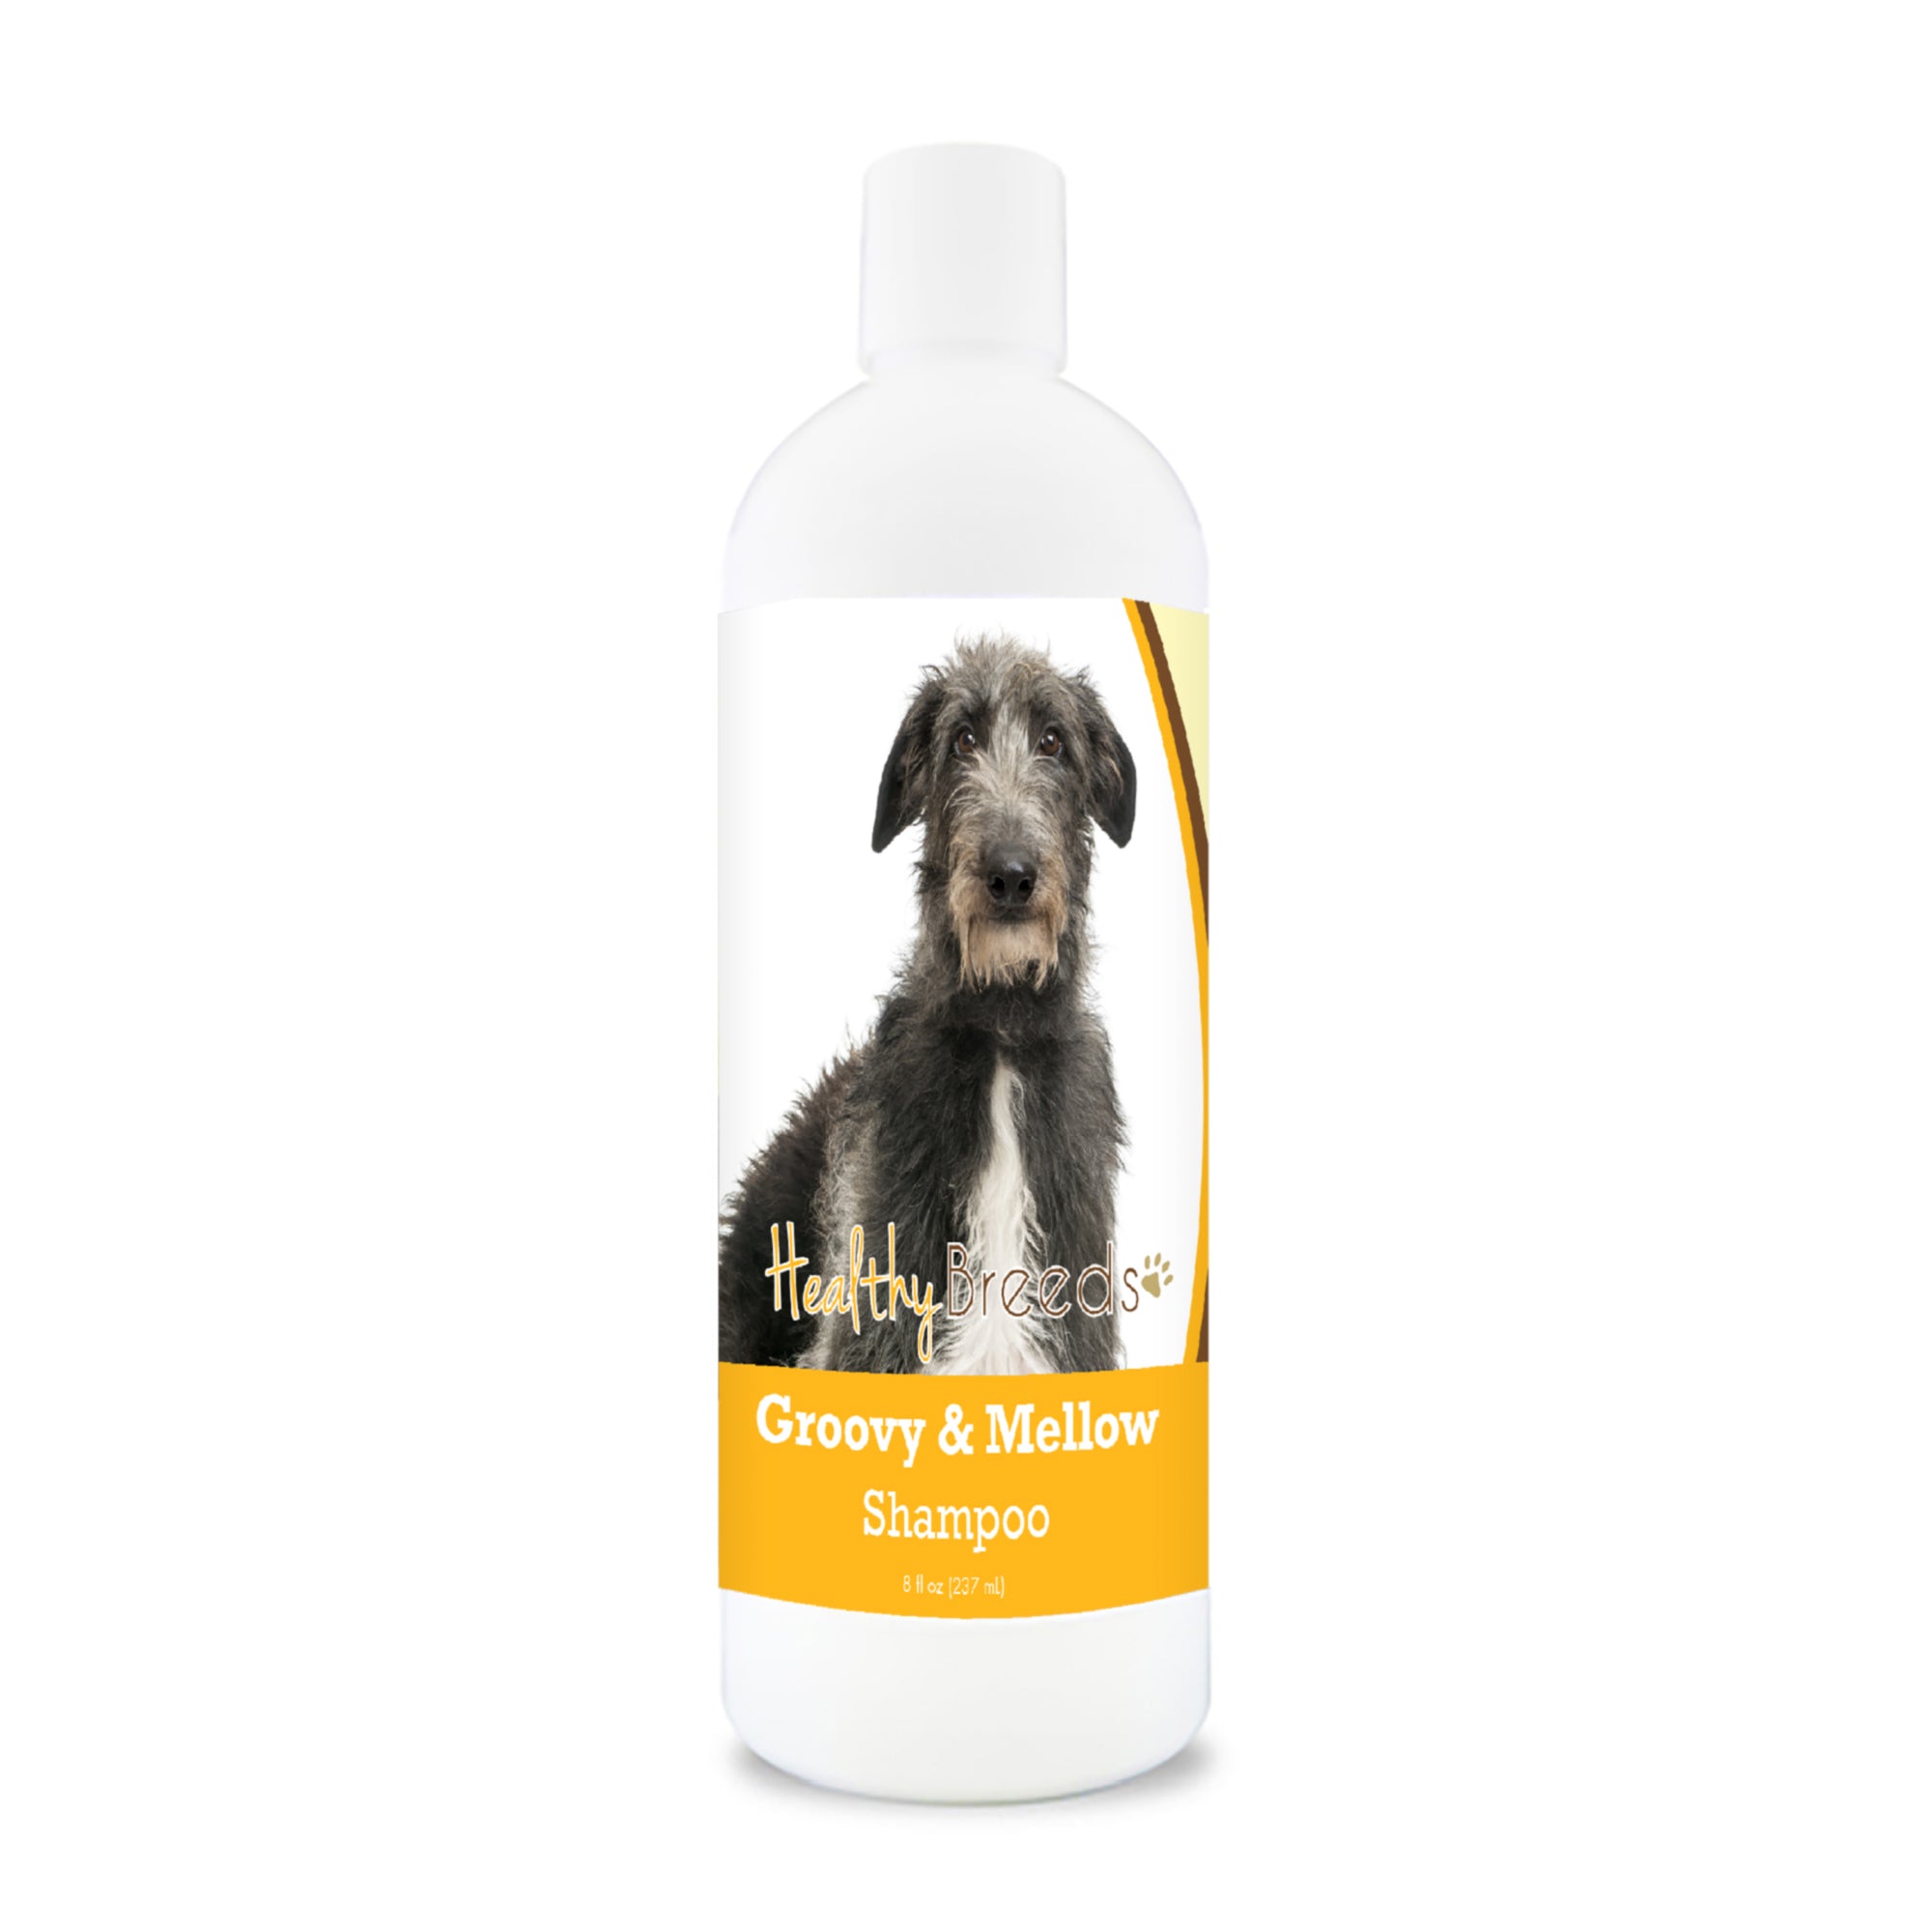 Scottish Deerhound Groovy & Mellow Shampoo 8 oz